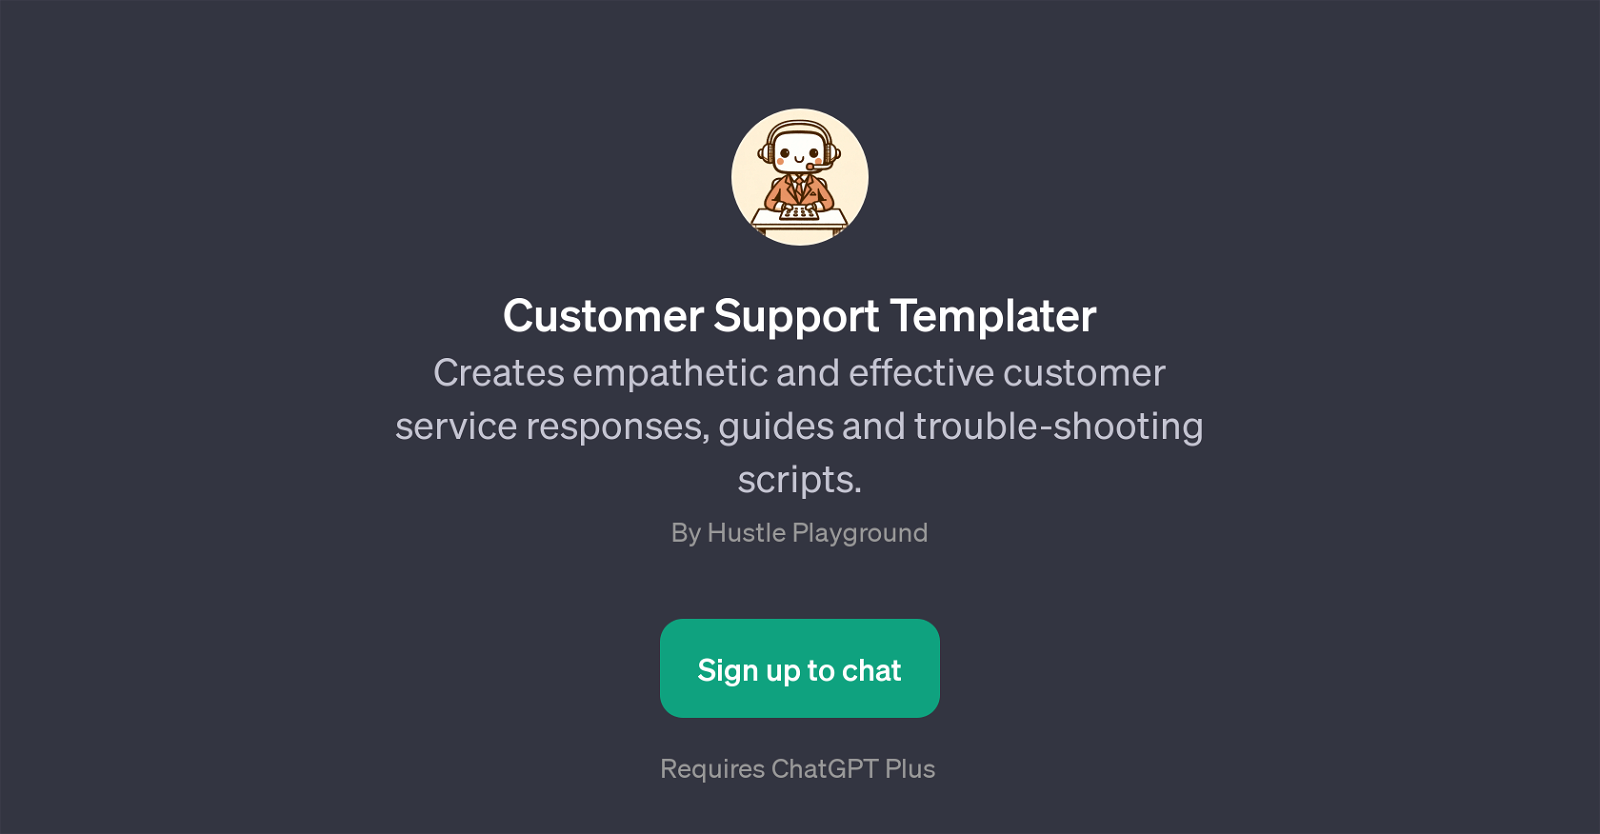 Customer Support Templater website